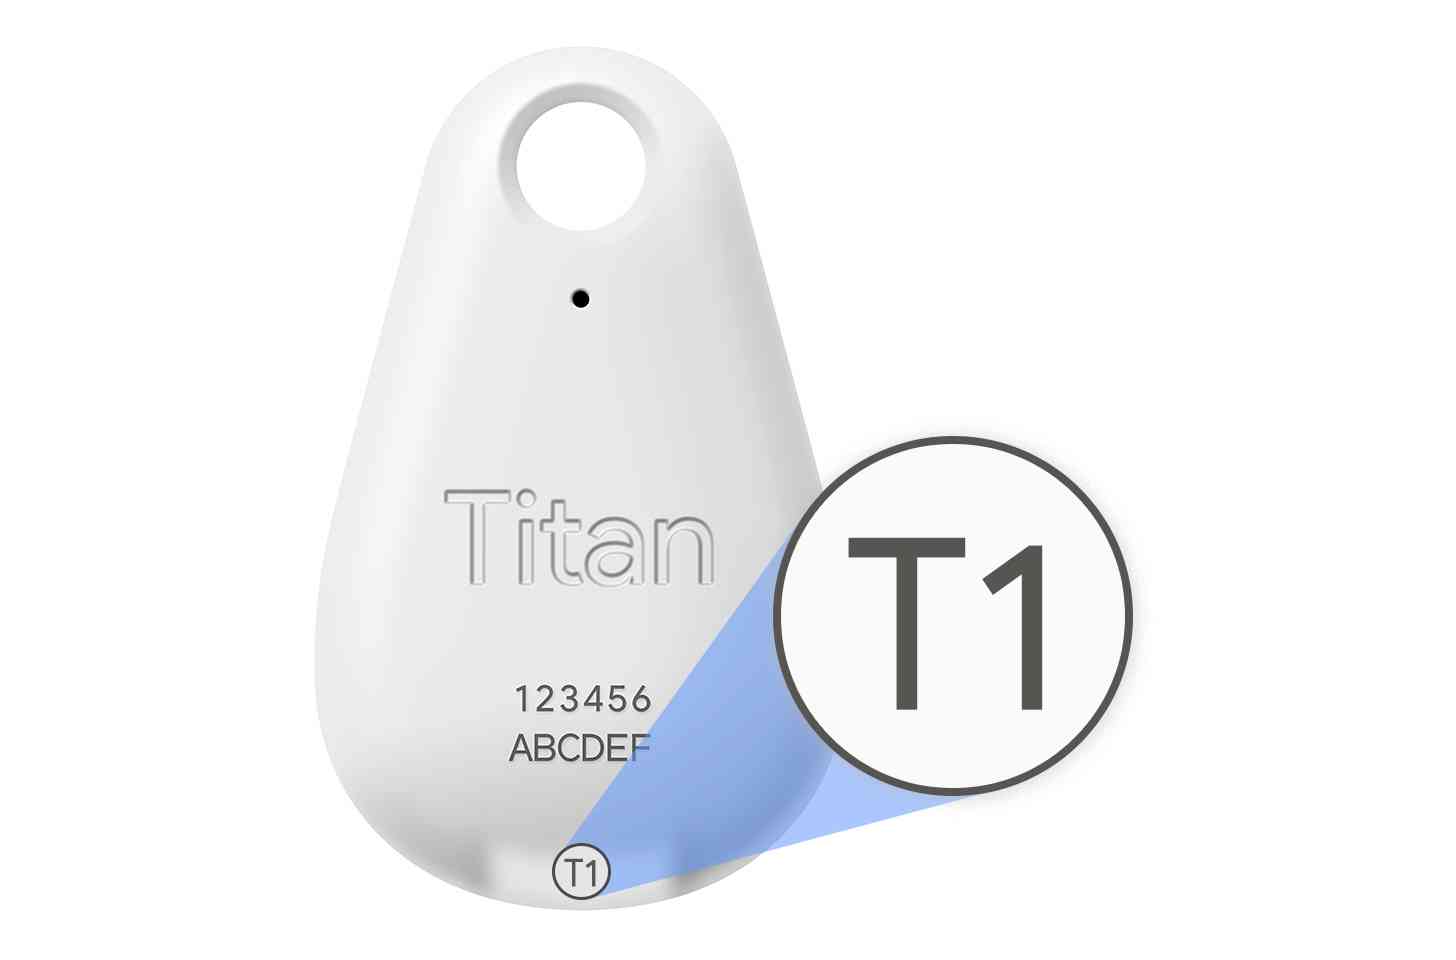 Titan Security Key issue